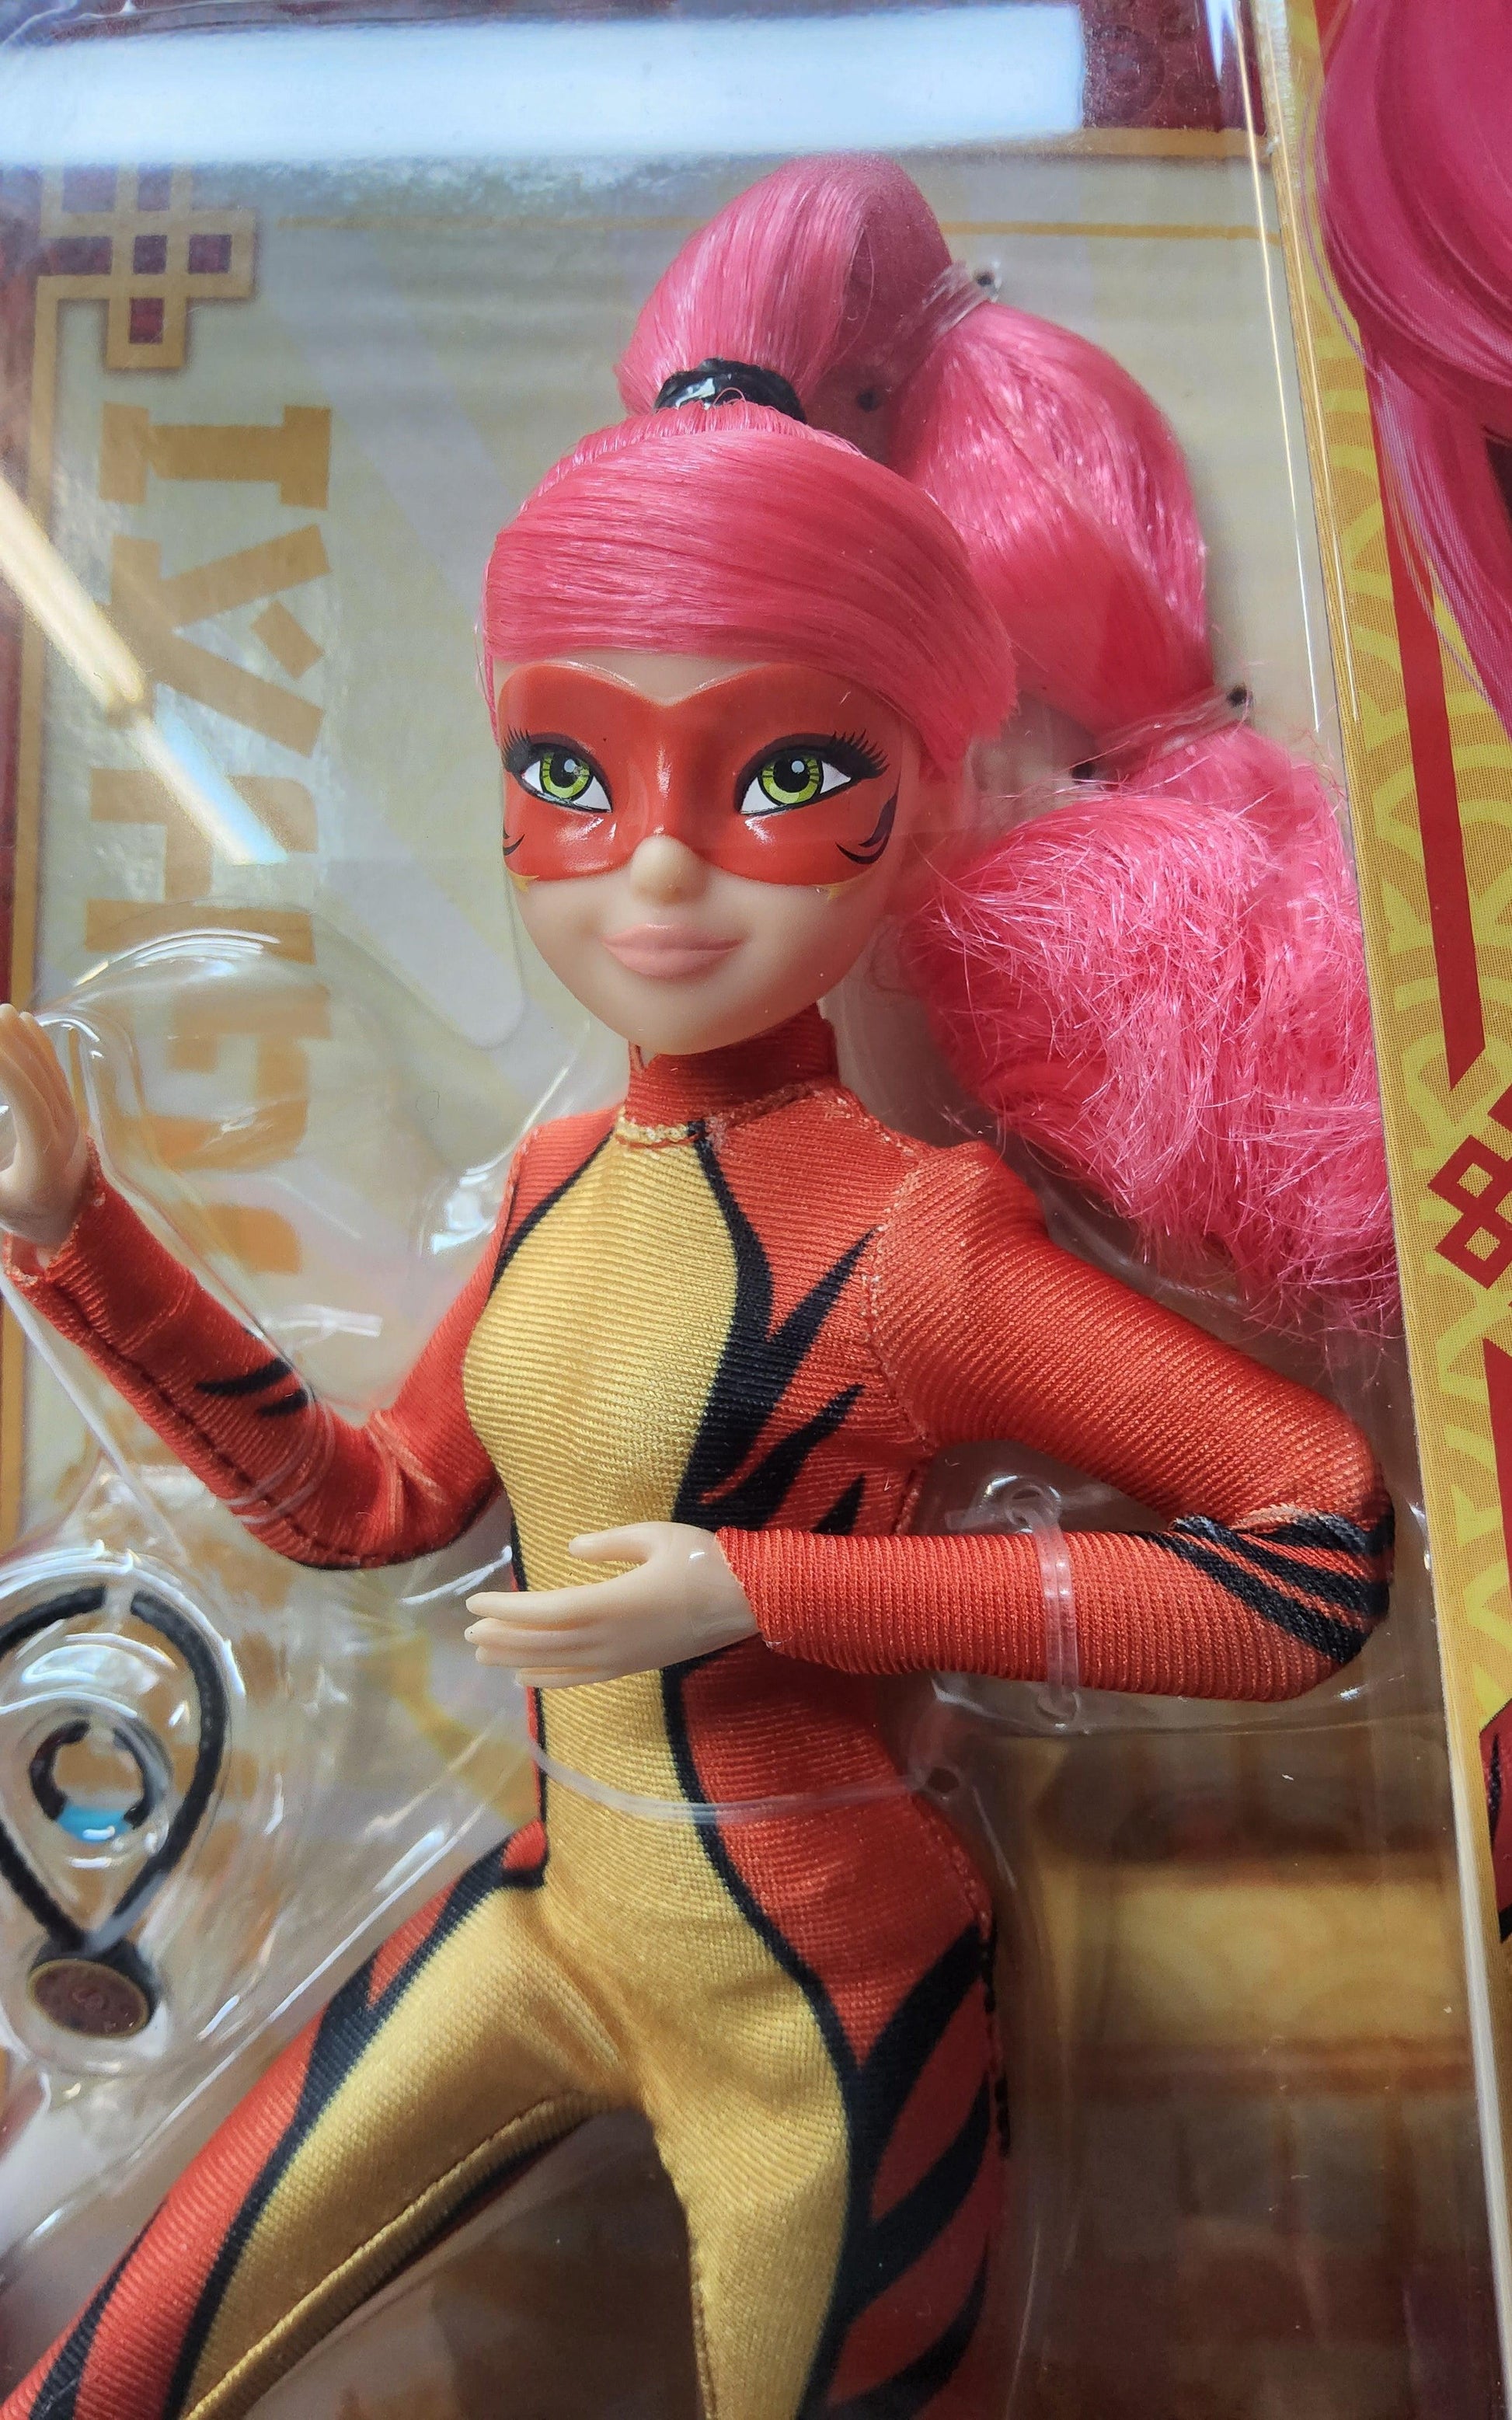 Miraculous Ladybug Miraculous Heroez 10.5 Fashion Doll with